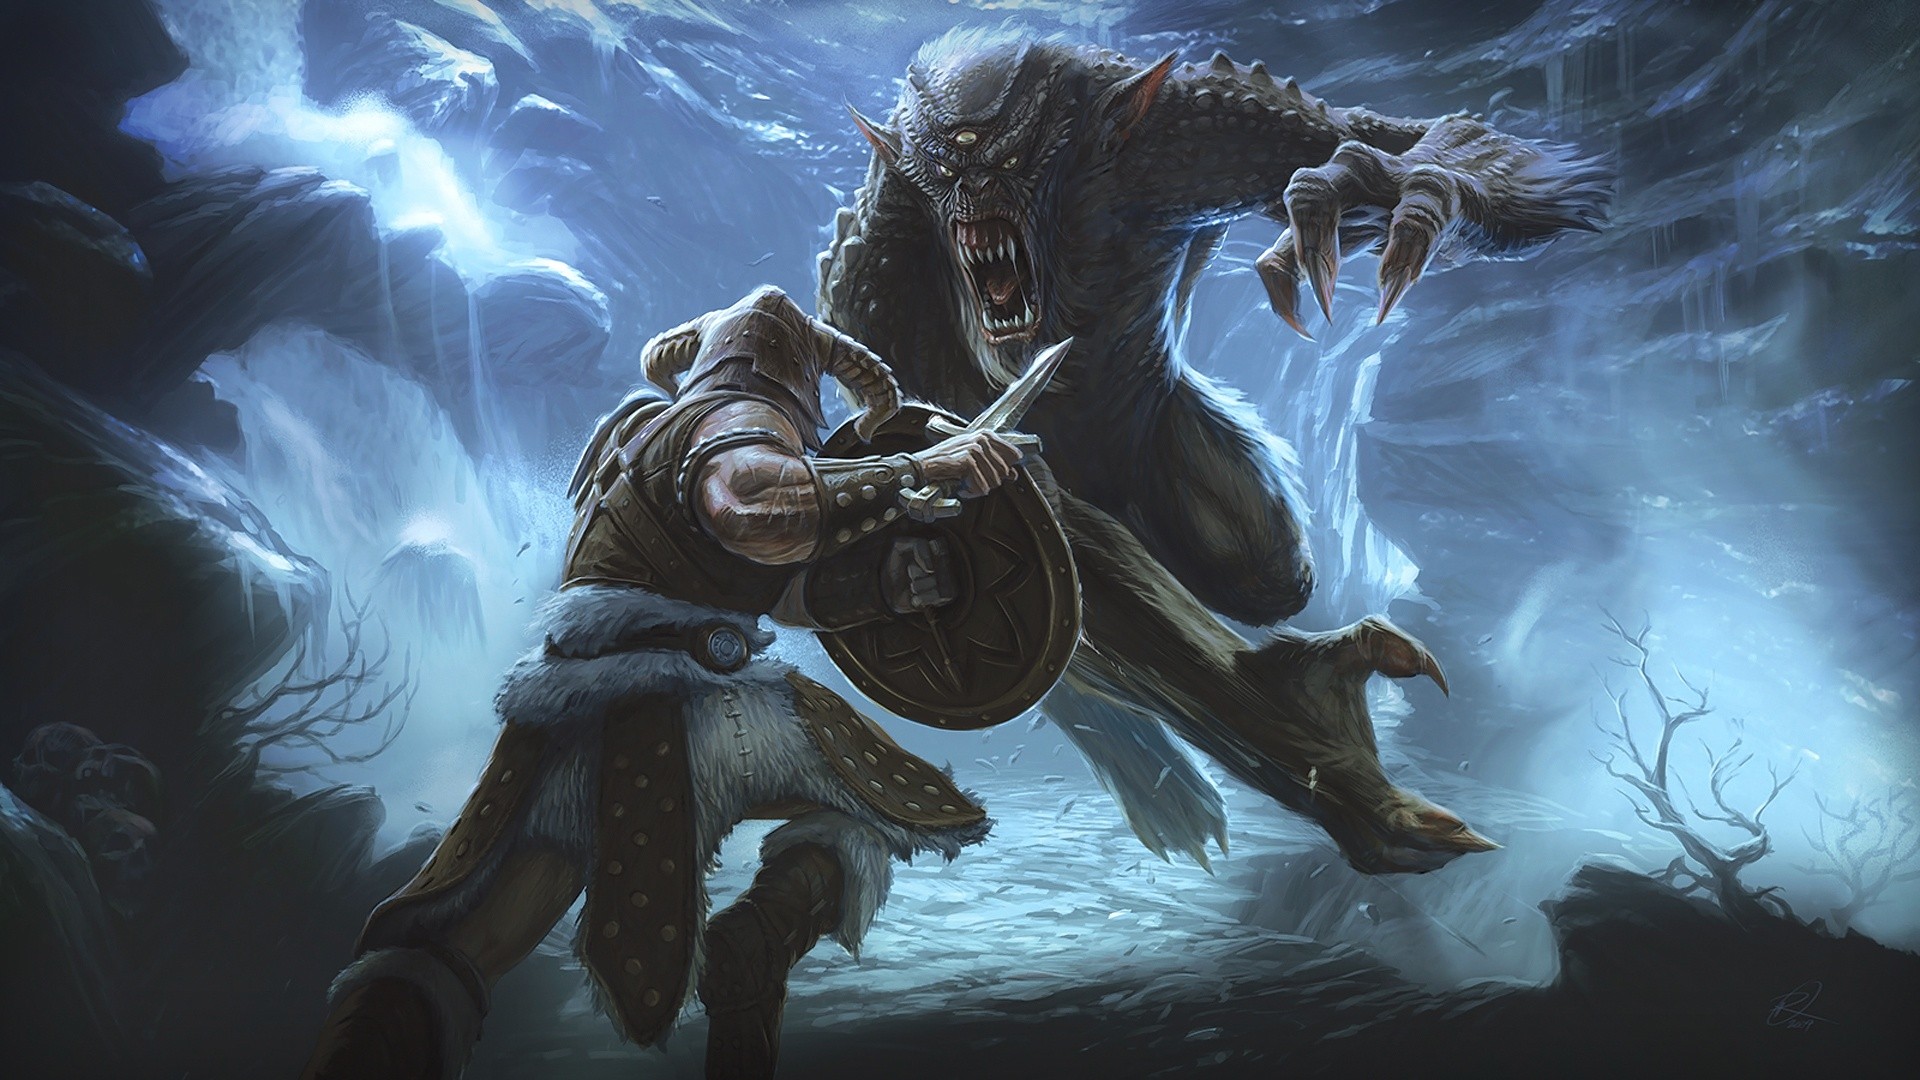 Video Game The Elder Scrolls V: Skyrim HD Wallpaper